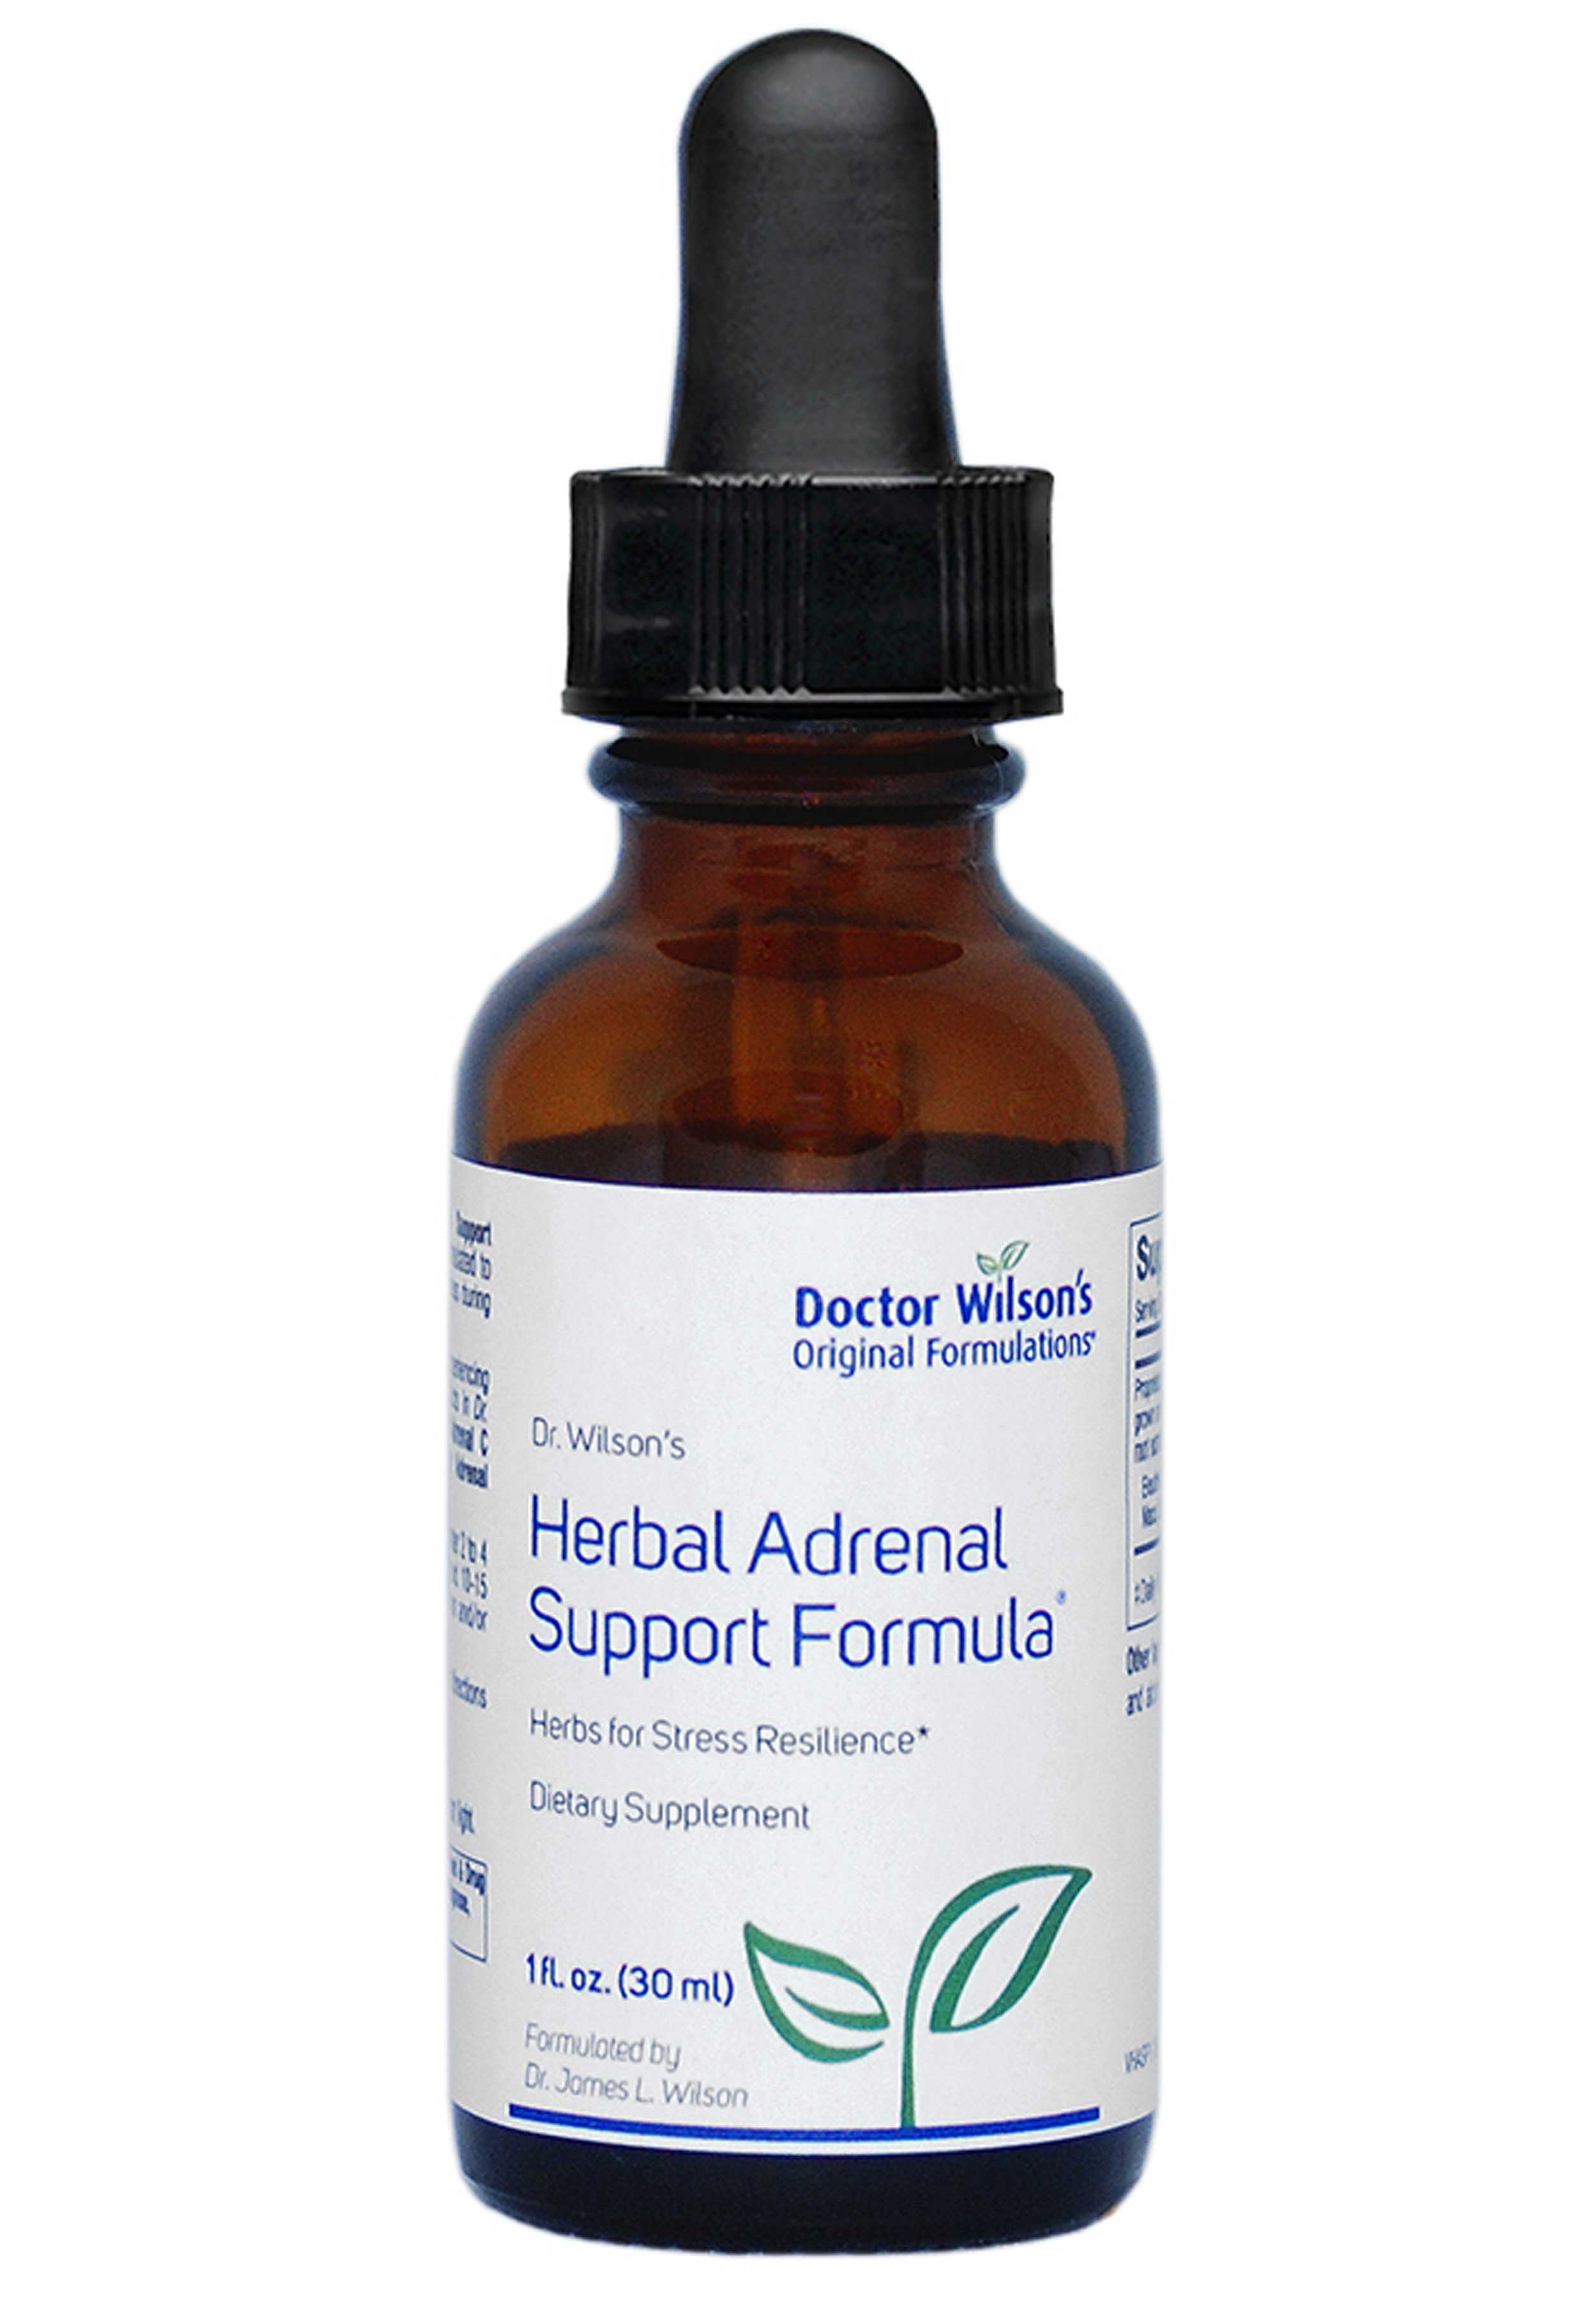 Doctor Wilson's Original Formulations Herbal Adrenal Support Formula